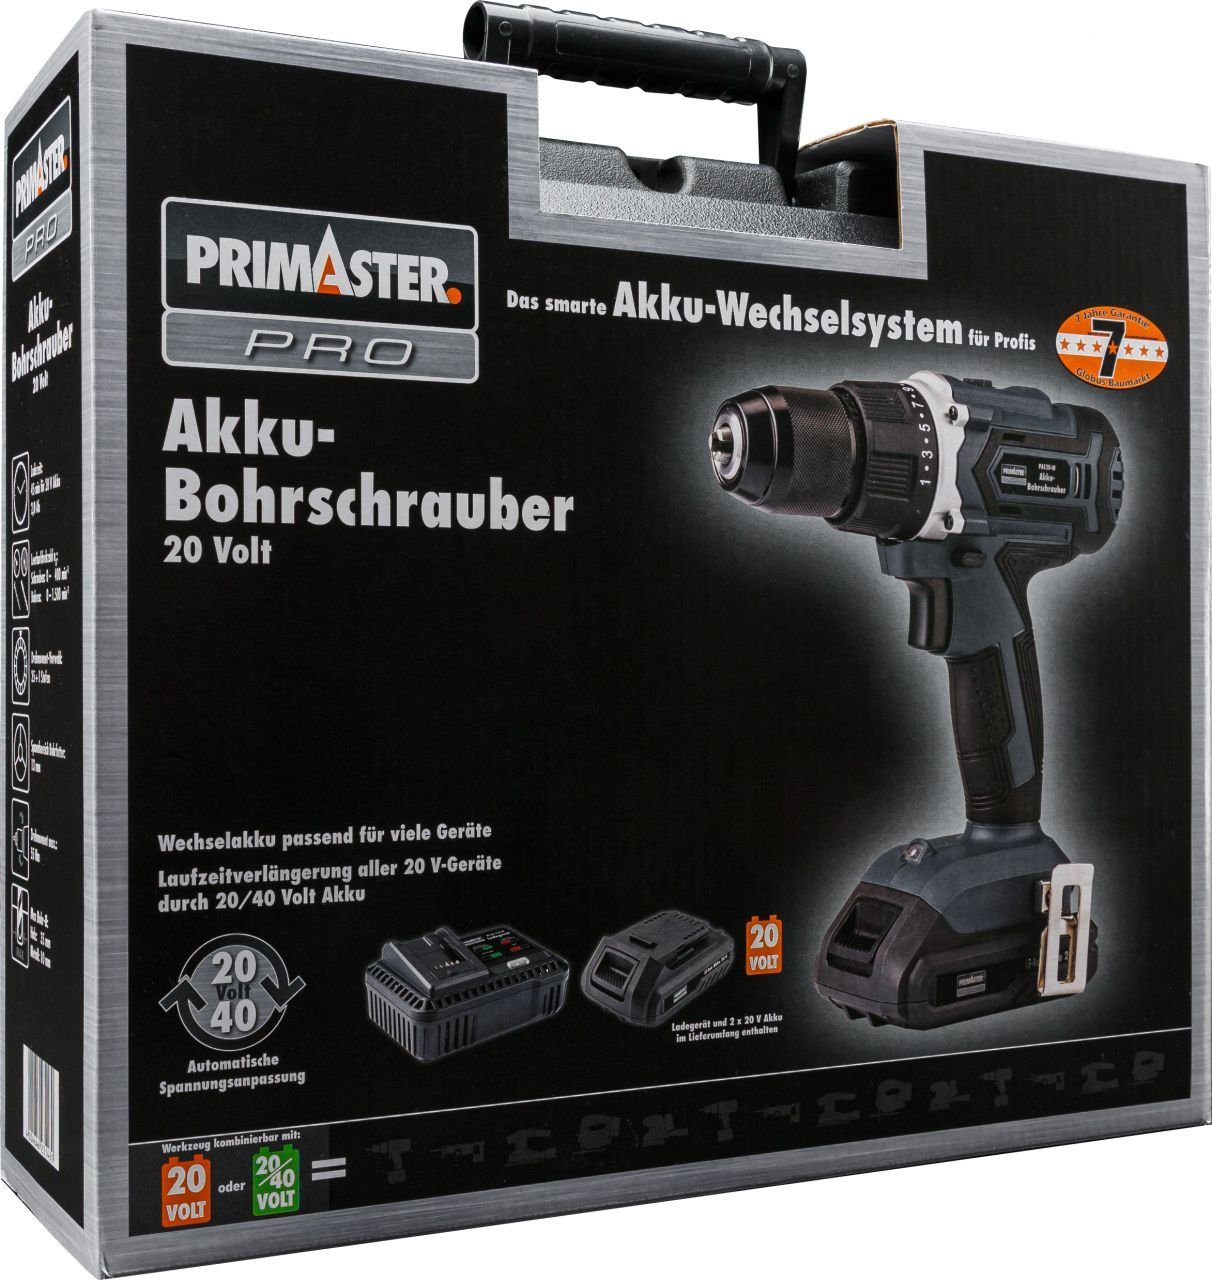 Primaster Akku-Bohrschrauber Primaster Pro PAS20-W mit V Akku-Bohrschrauber 20